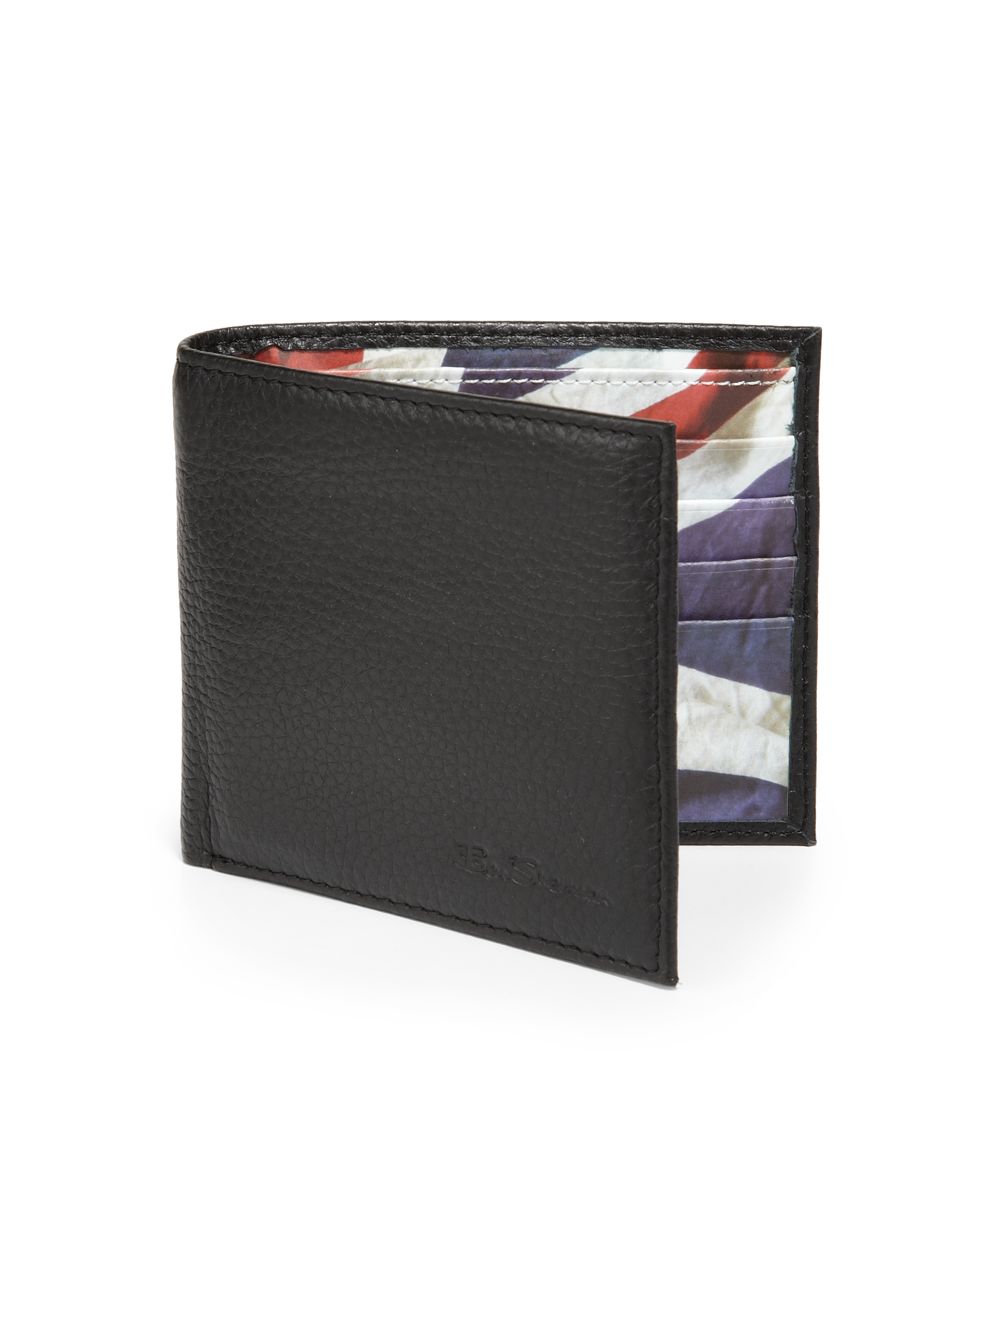 Ben Sherman Union Jack Bifold Leather Wallet in Black for Men - Lyst